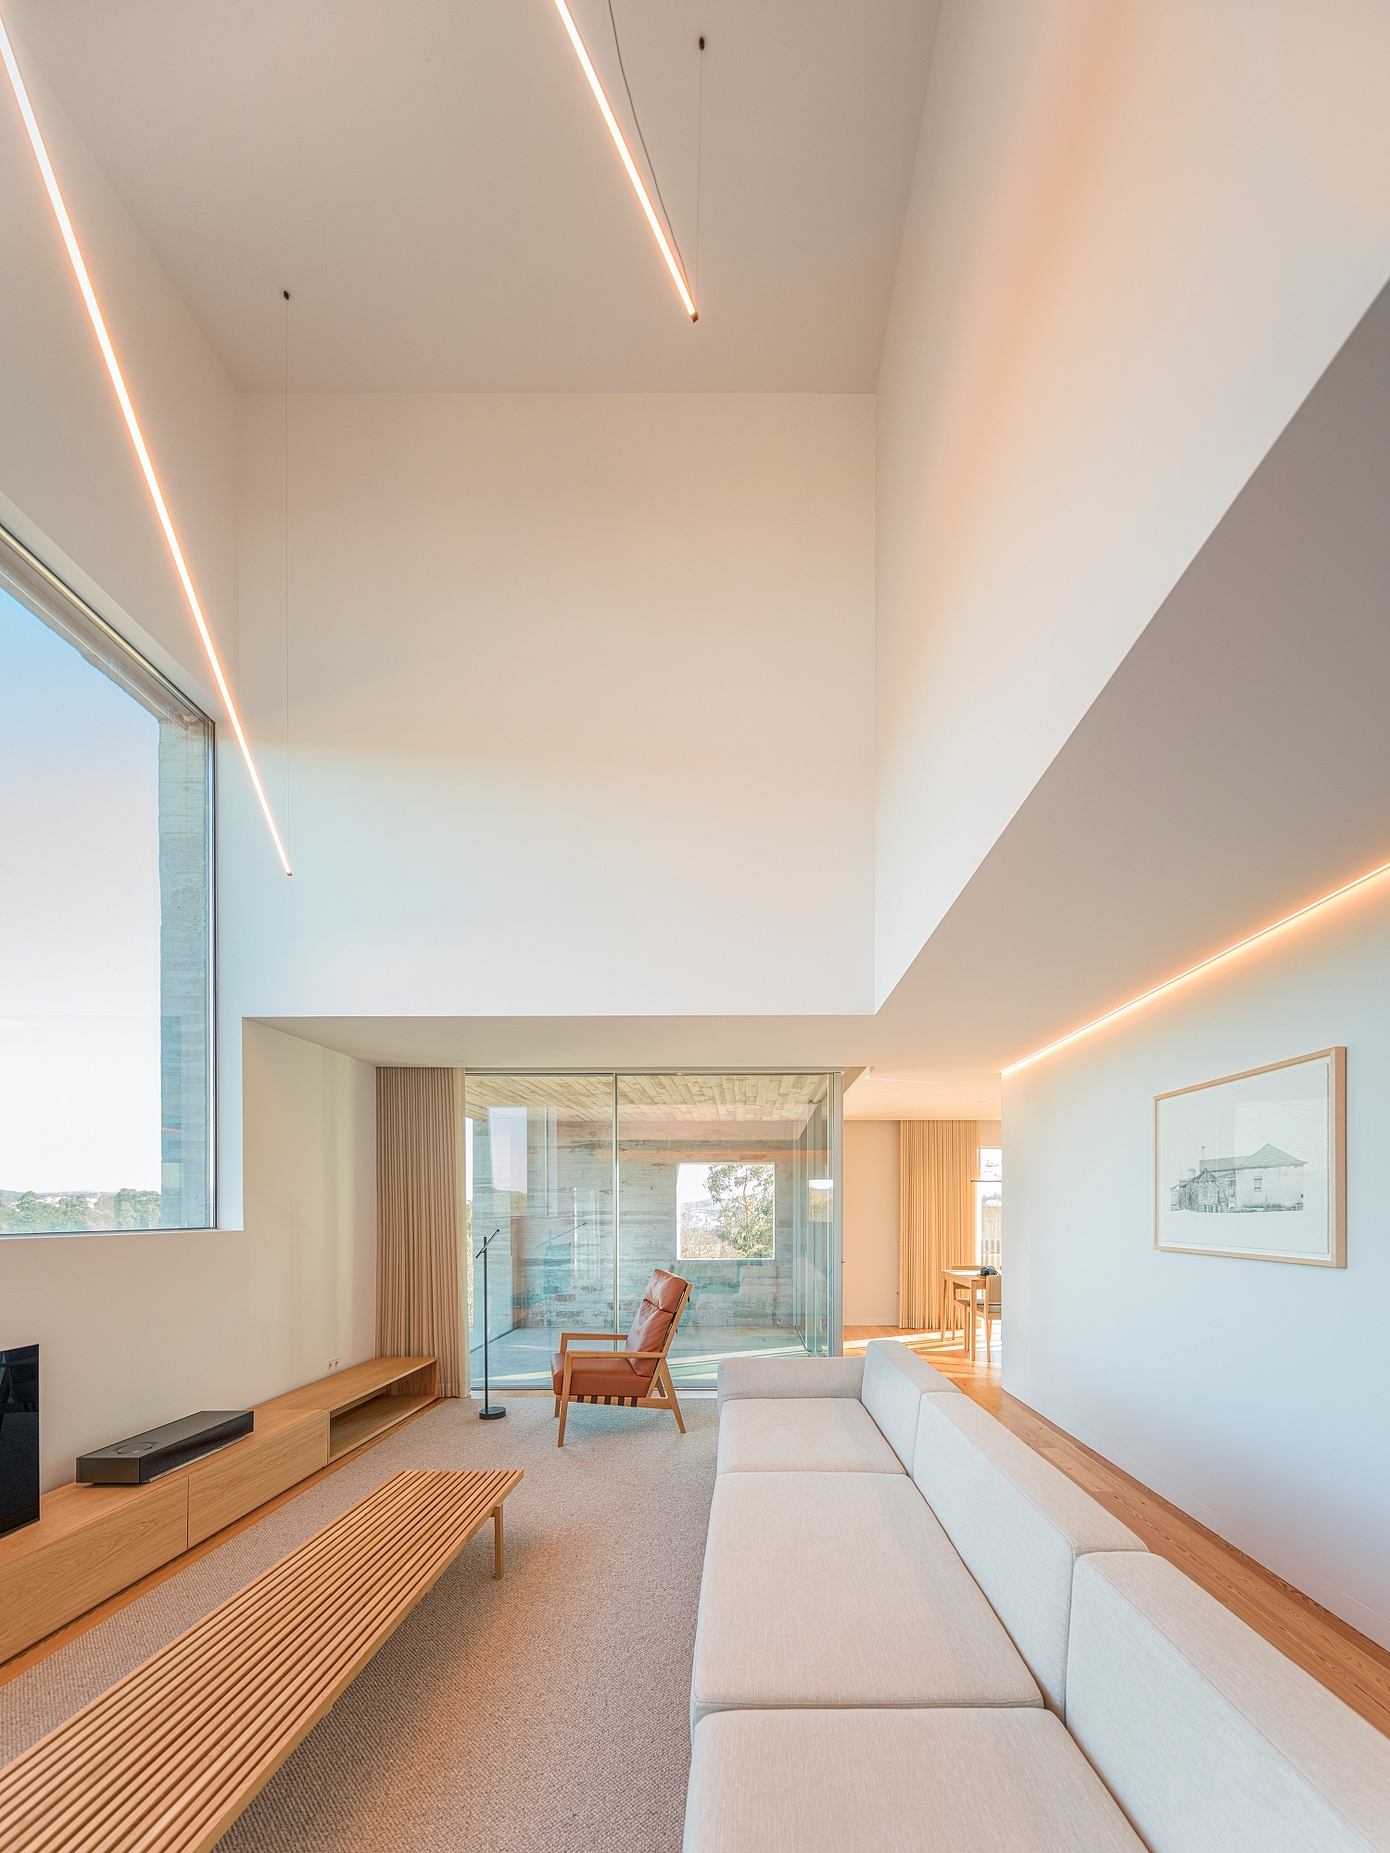 SV House: Contemporary Concrete Design for Rural Living